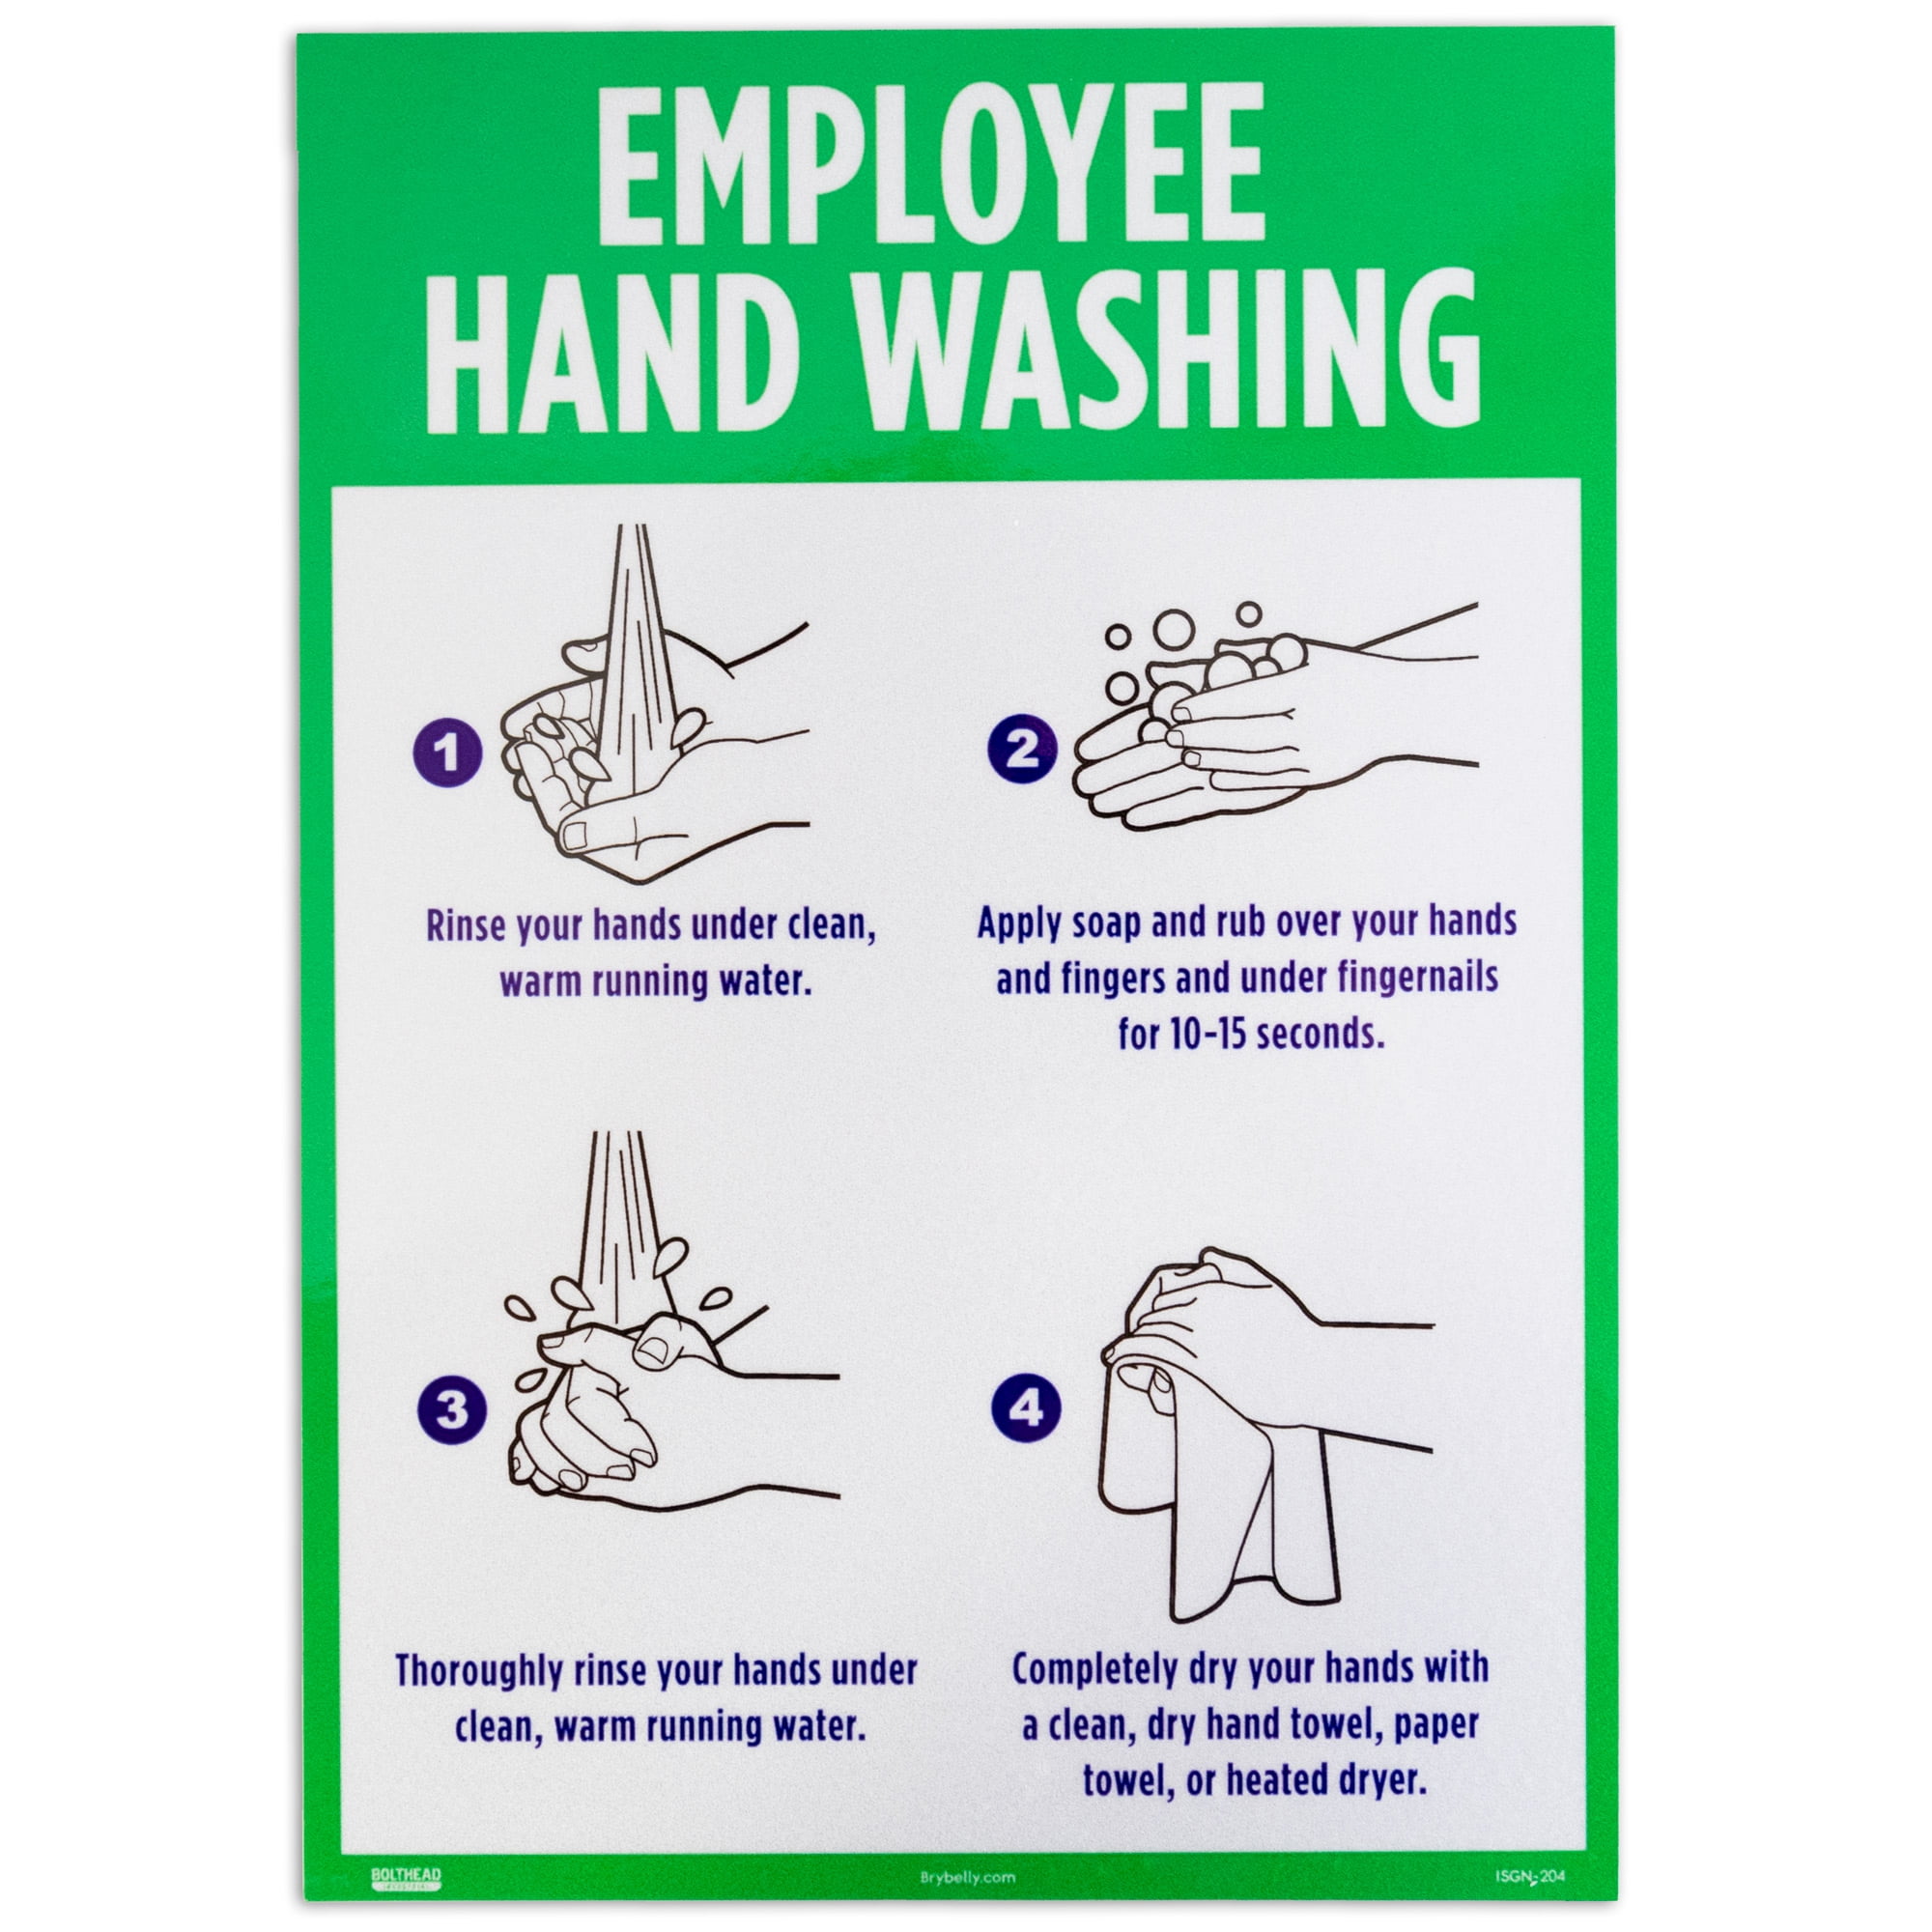 employee-hand-washing-decal-sign-public-restroom-or-kitchen-sink-guide-walmart-walmart